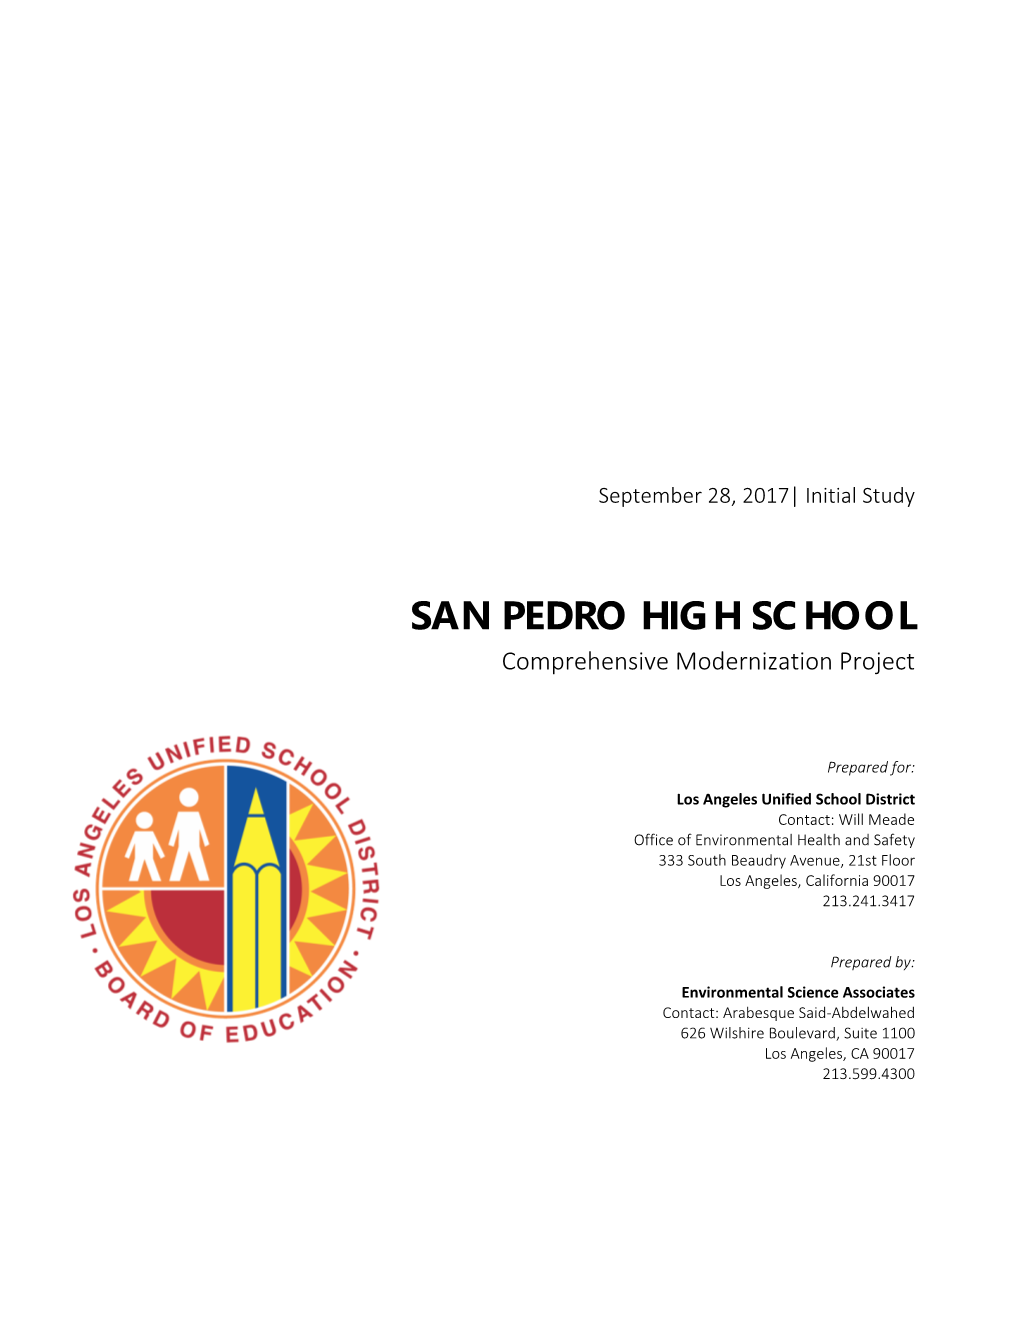 SAN PEDRO HIGH SCHOOL Comprehensive Modernization Project